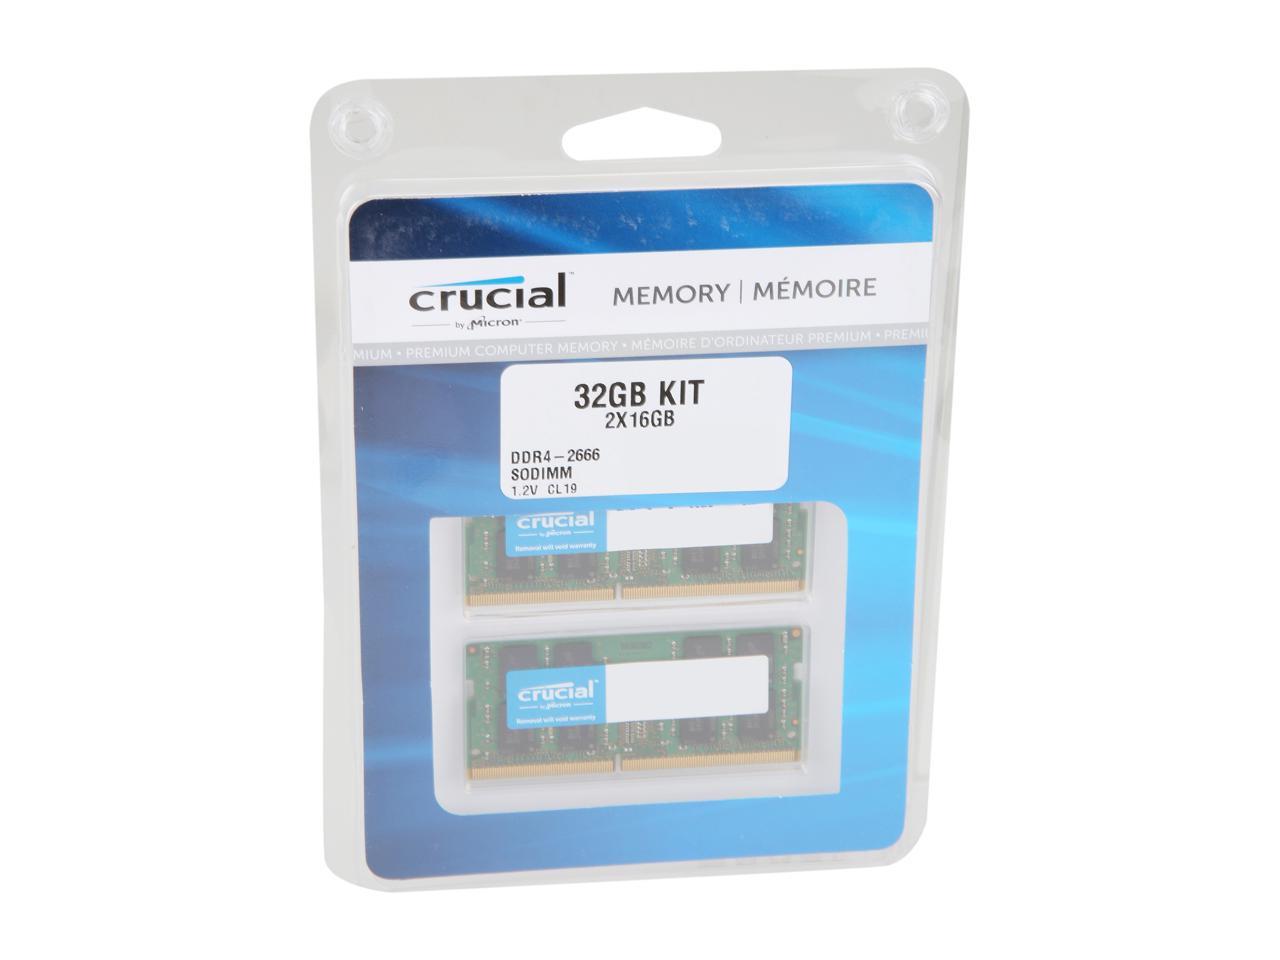 Crucial 32GB (2 x 16GB) DDR4 2666 Laptop Memory - Newegg.com